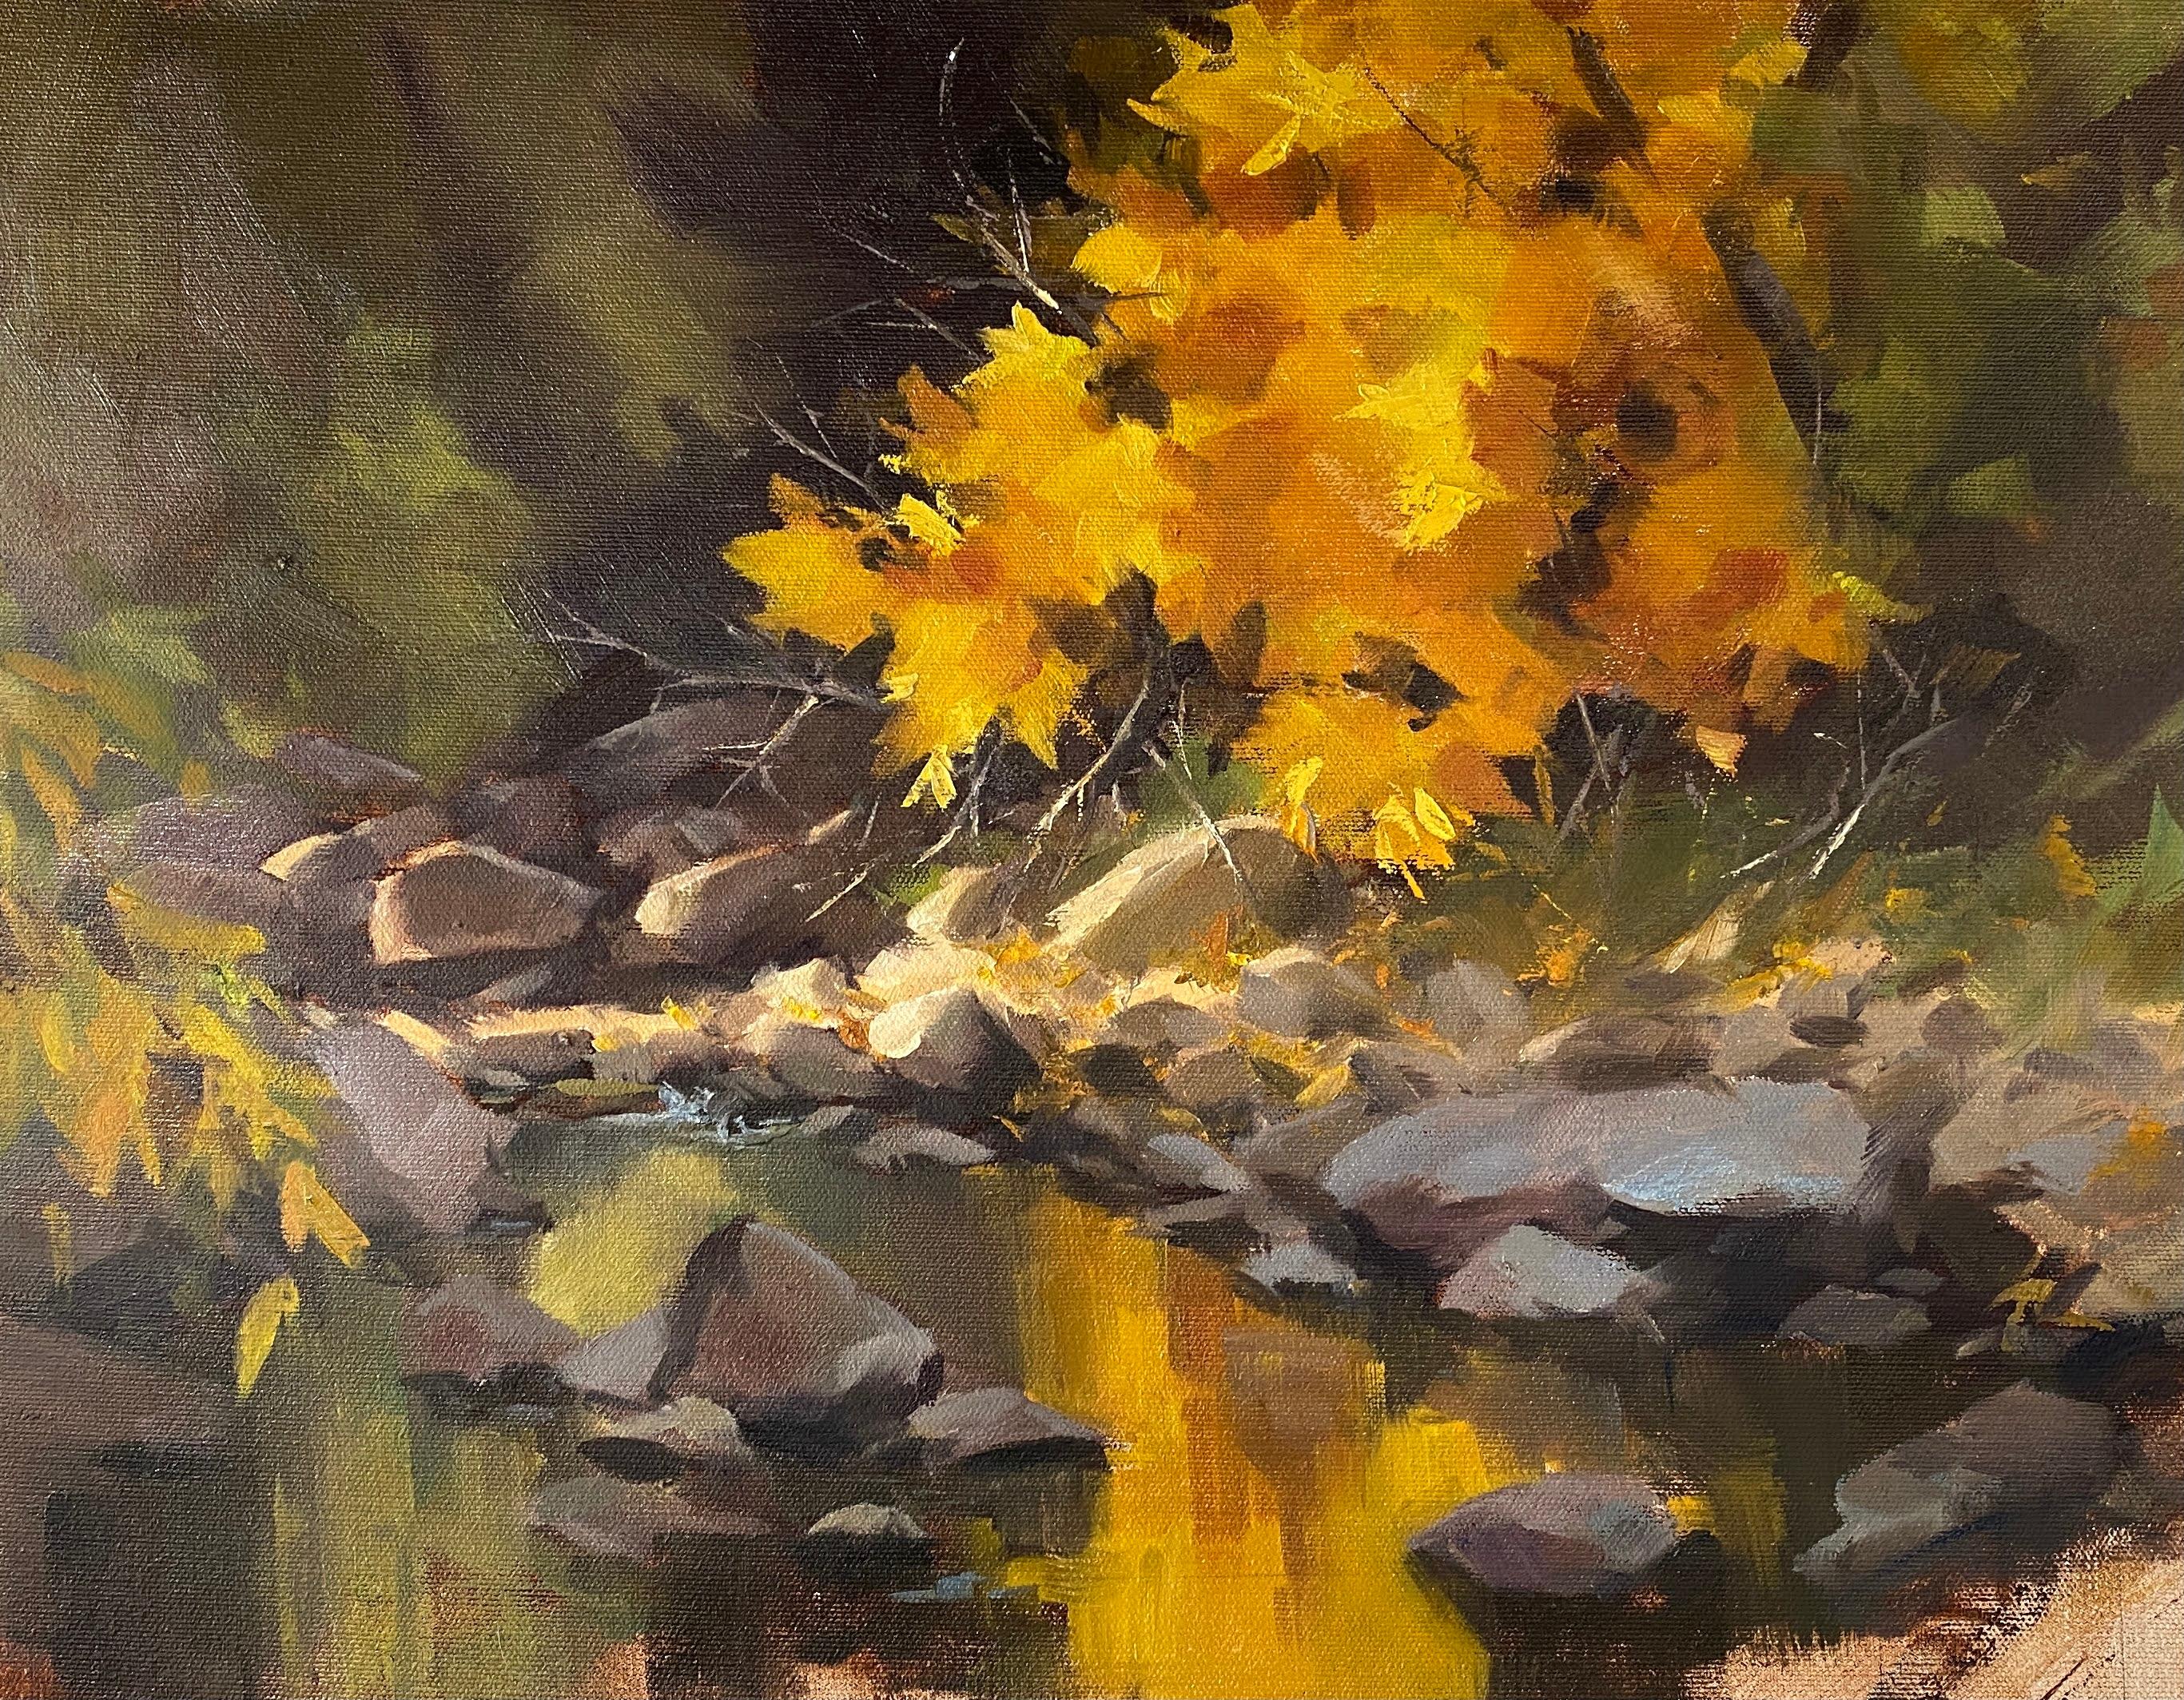 Judd Mercer Landscape Painting - "Stream on Fire, " Oil painting